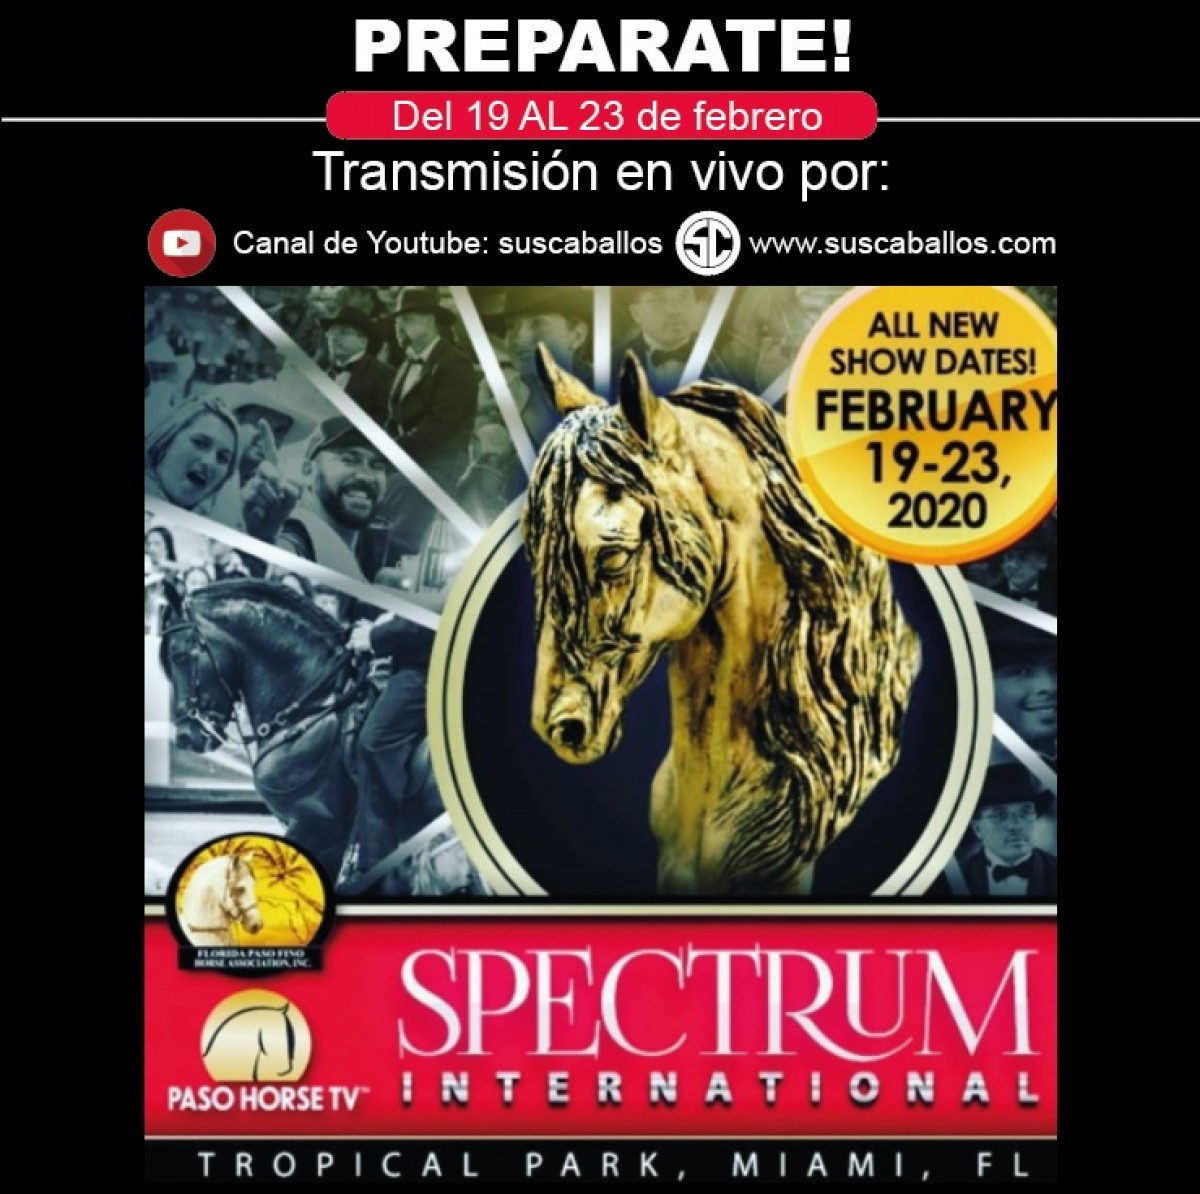 SPECTRUM INTERNACIONAL - TROPICAL PARK, MIAMI, FLORIDA - DEL 19 AL 23 DE FEBRERO